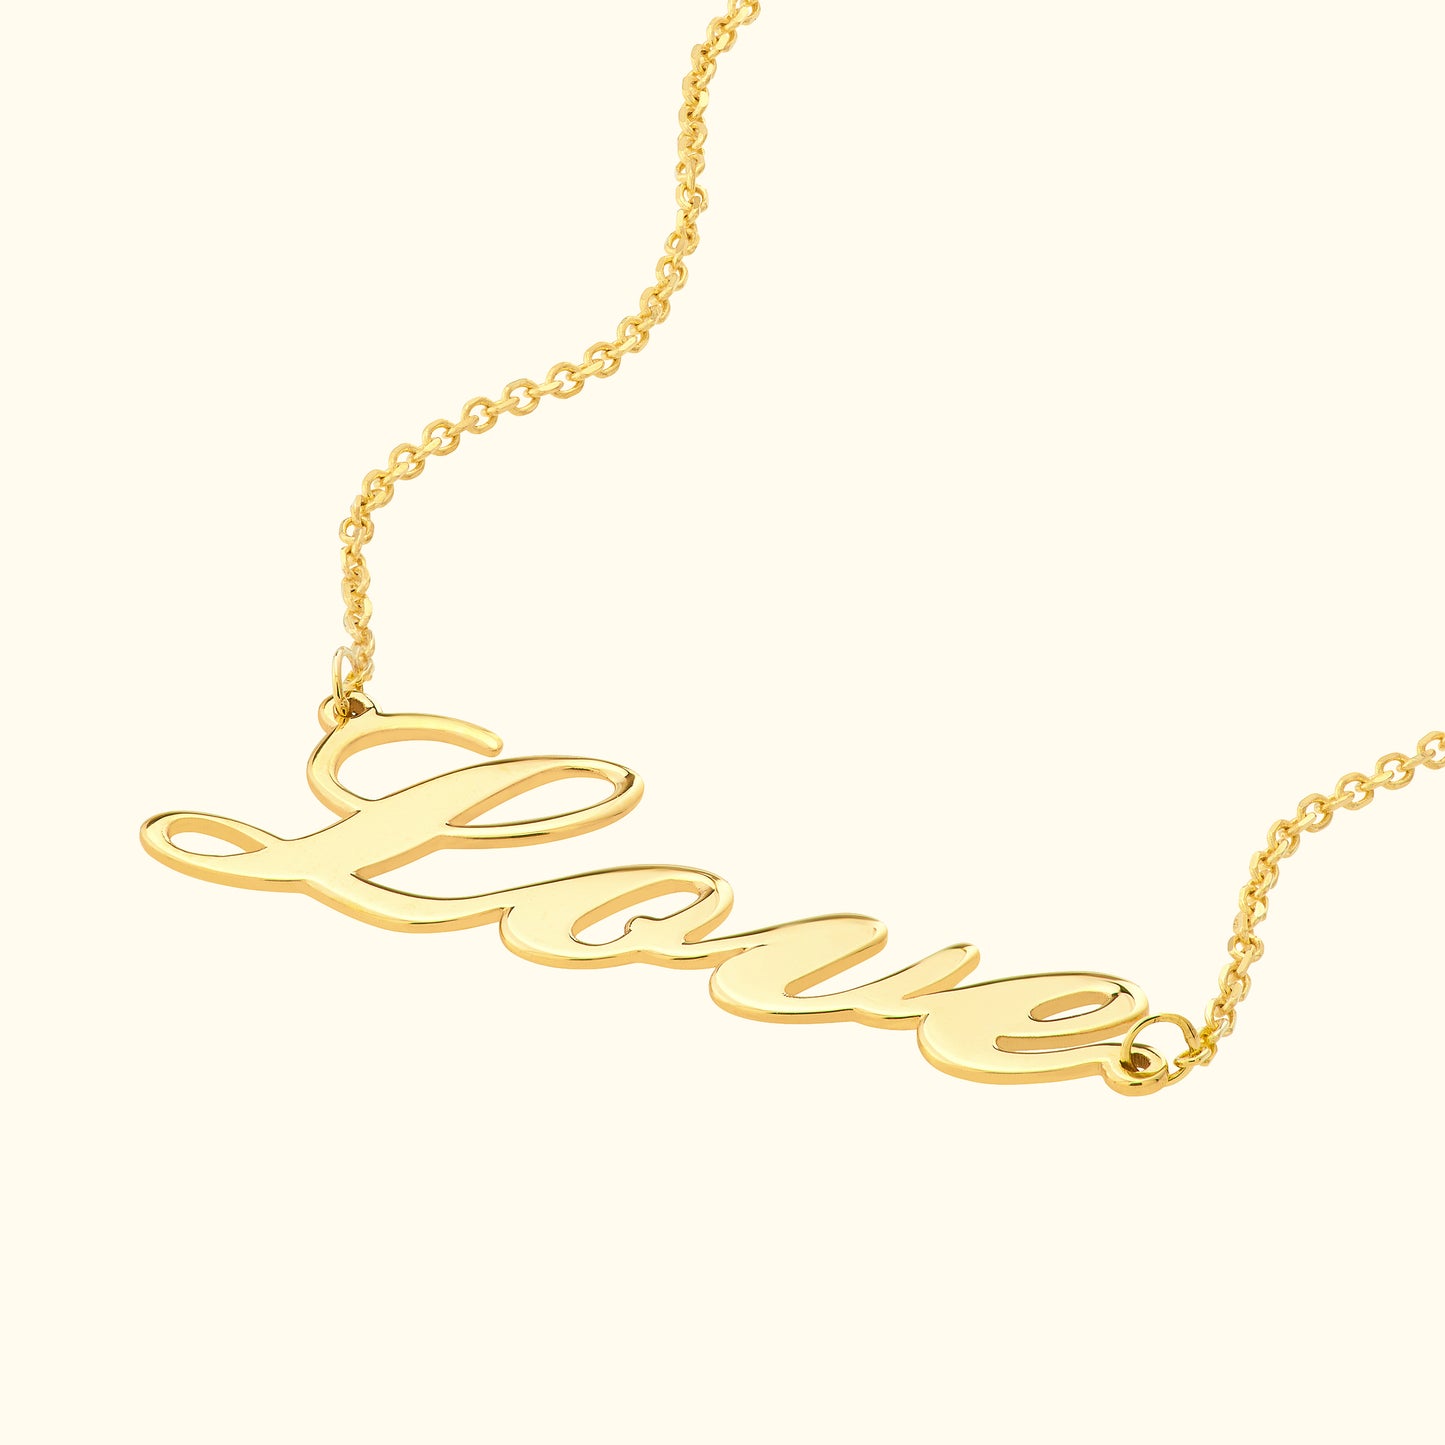 Cursive 'Love' Bracelet